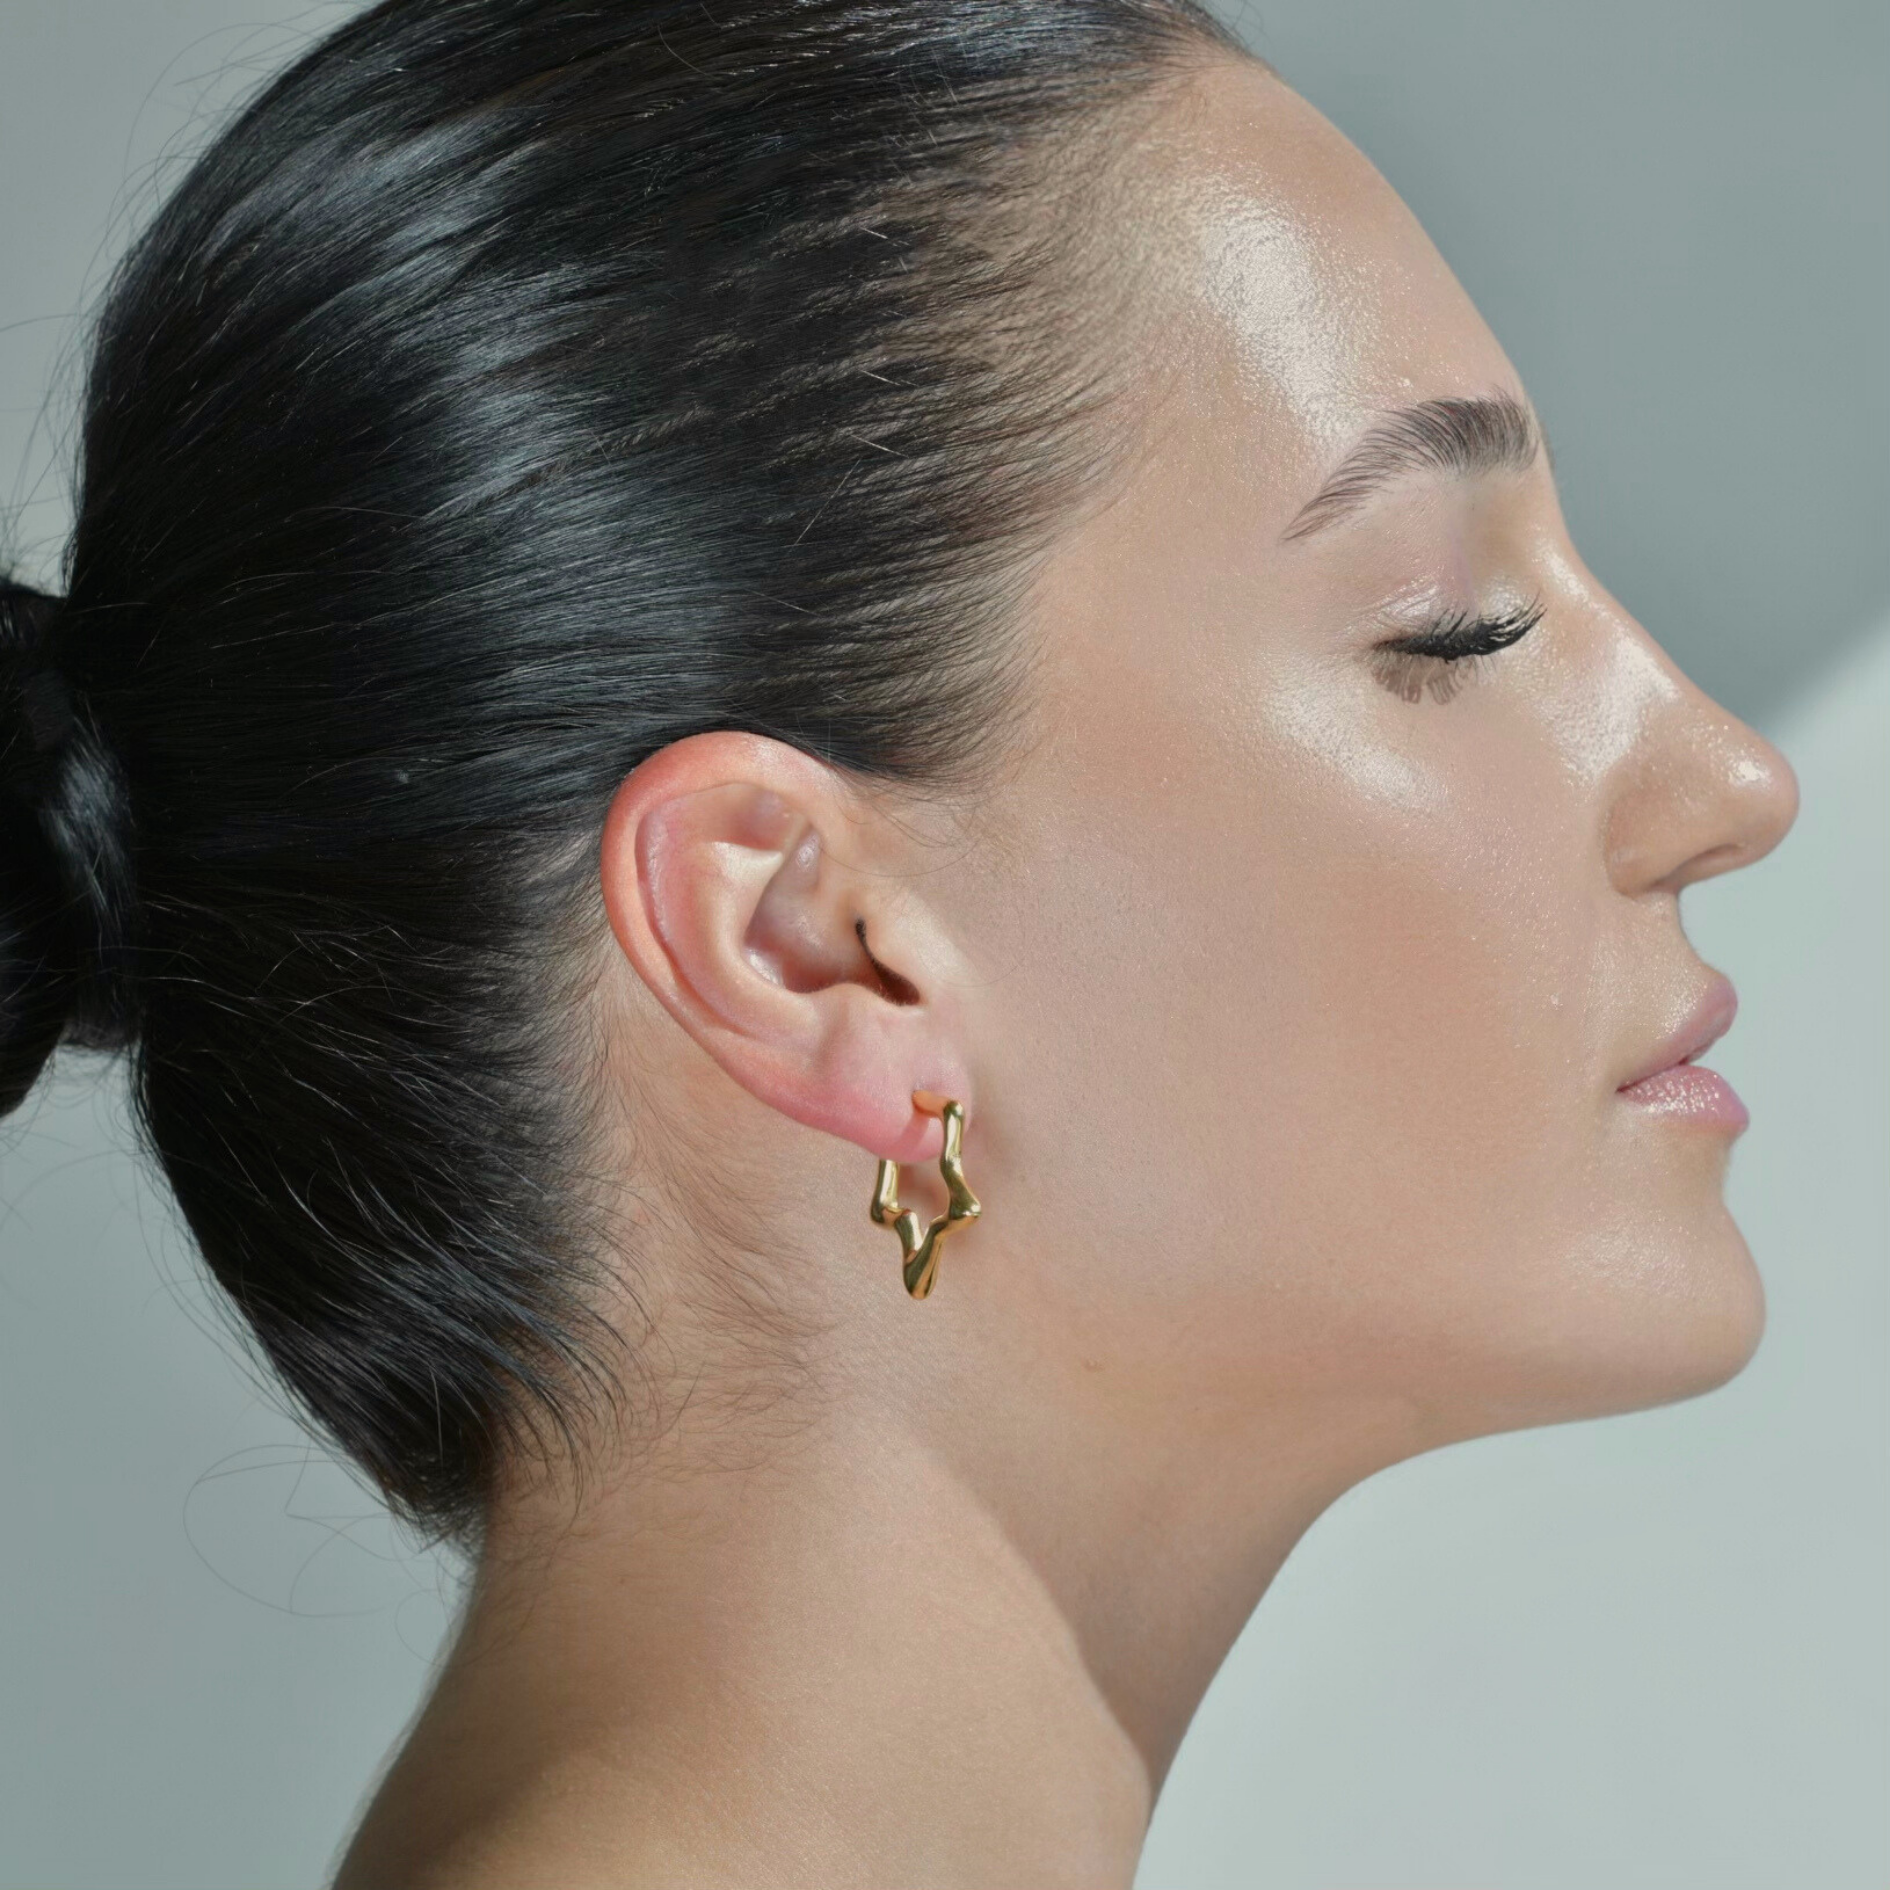 Women wearing the Star shaped gold hoop earrings. Irregular star shape pair of earrings.